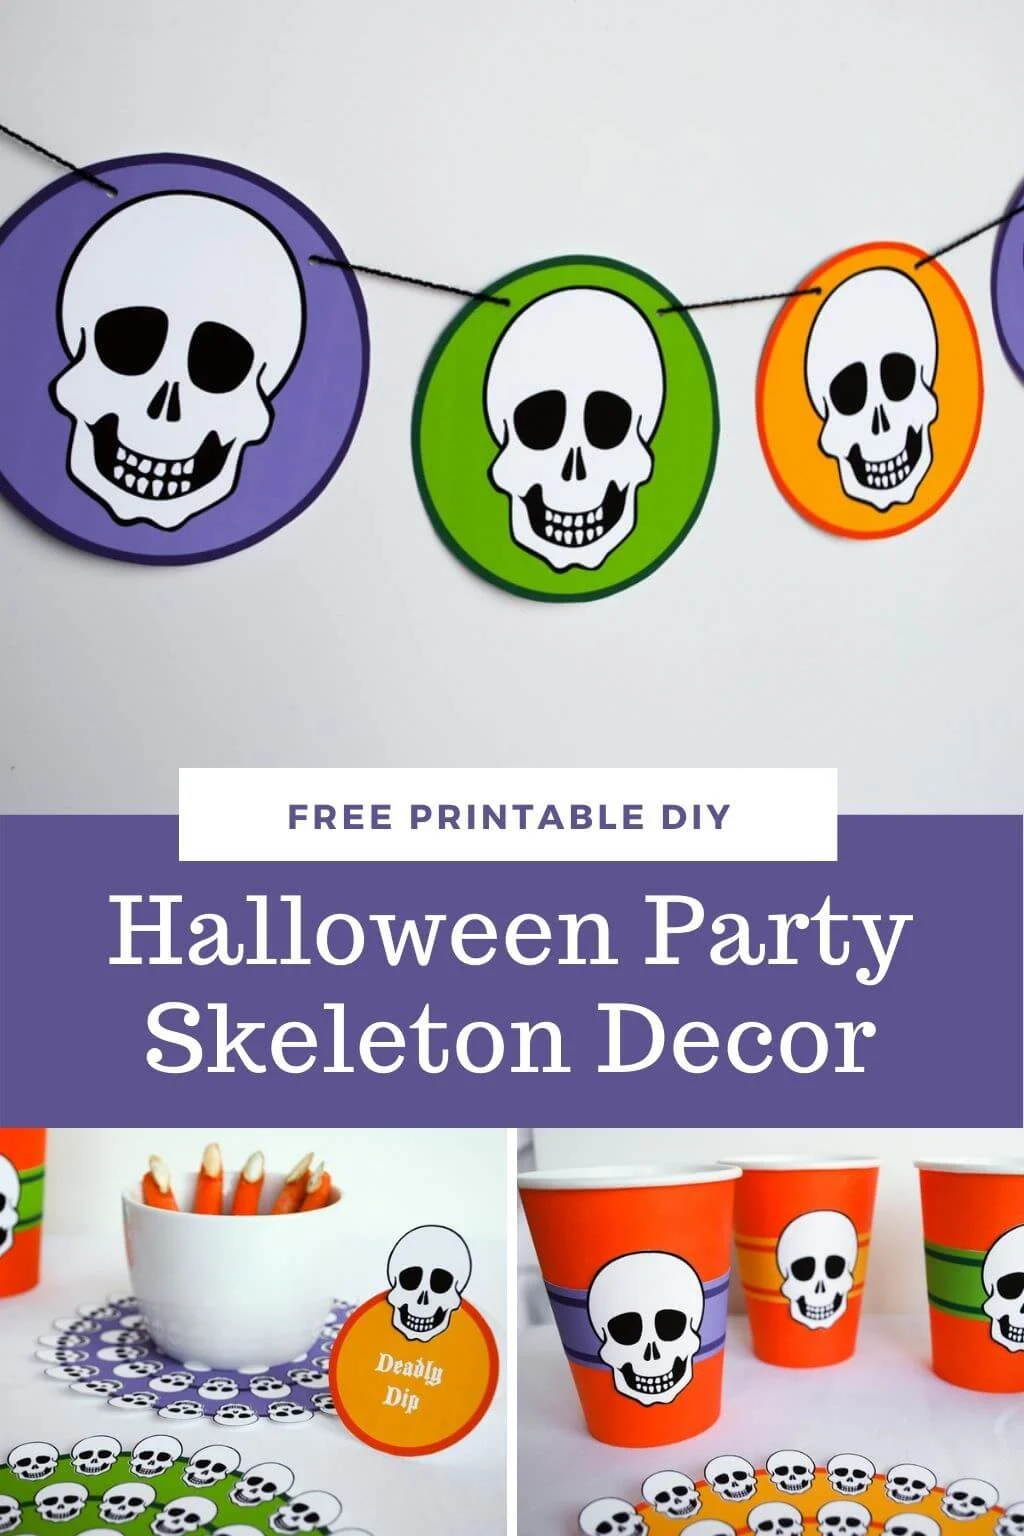 DIY Skeleton Free Printable Halloween Party Decorations